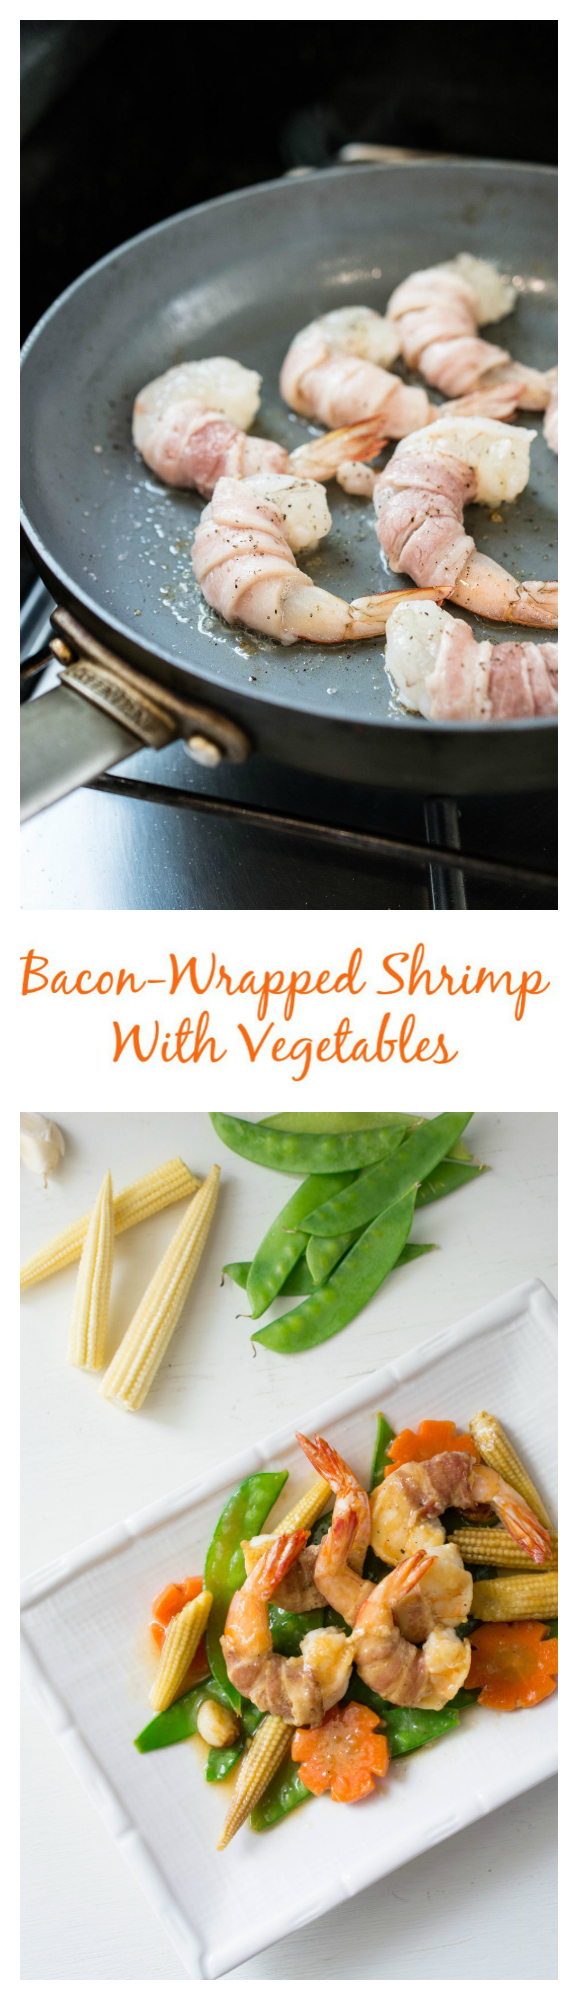 Bacon Wrapped Shrimp with Veggies